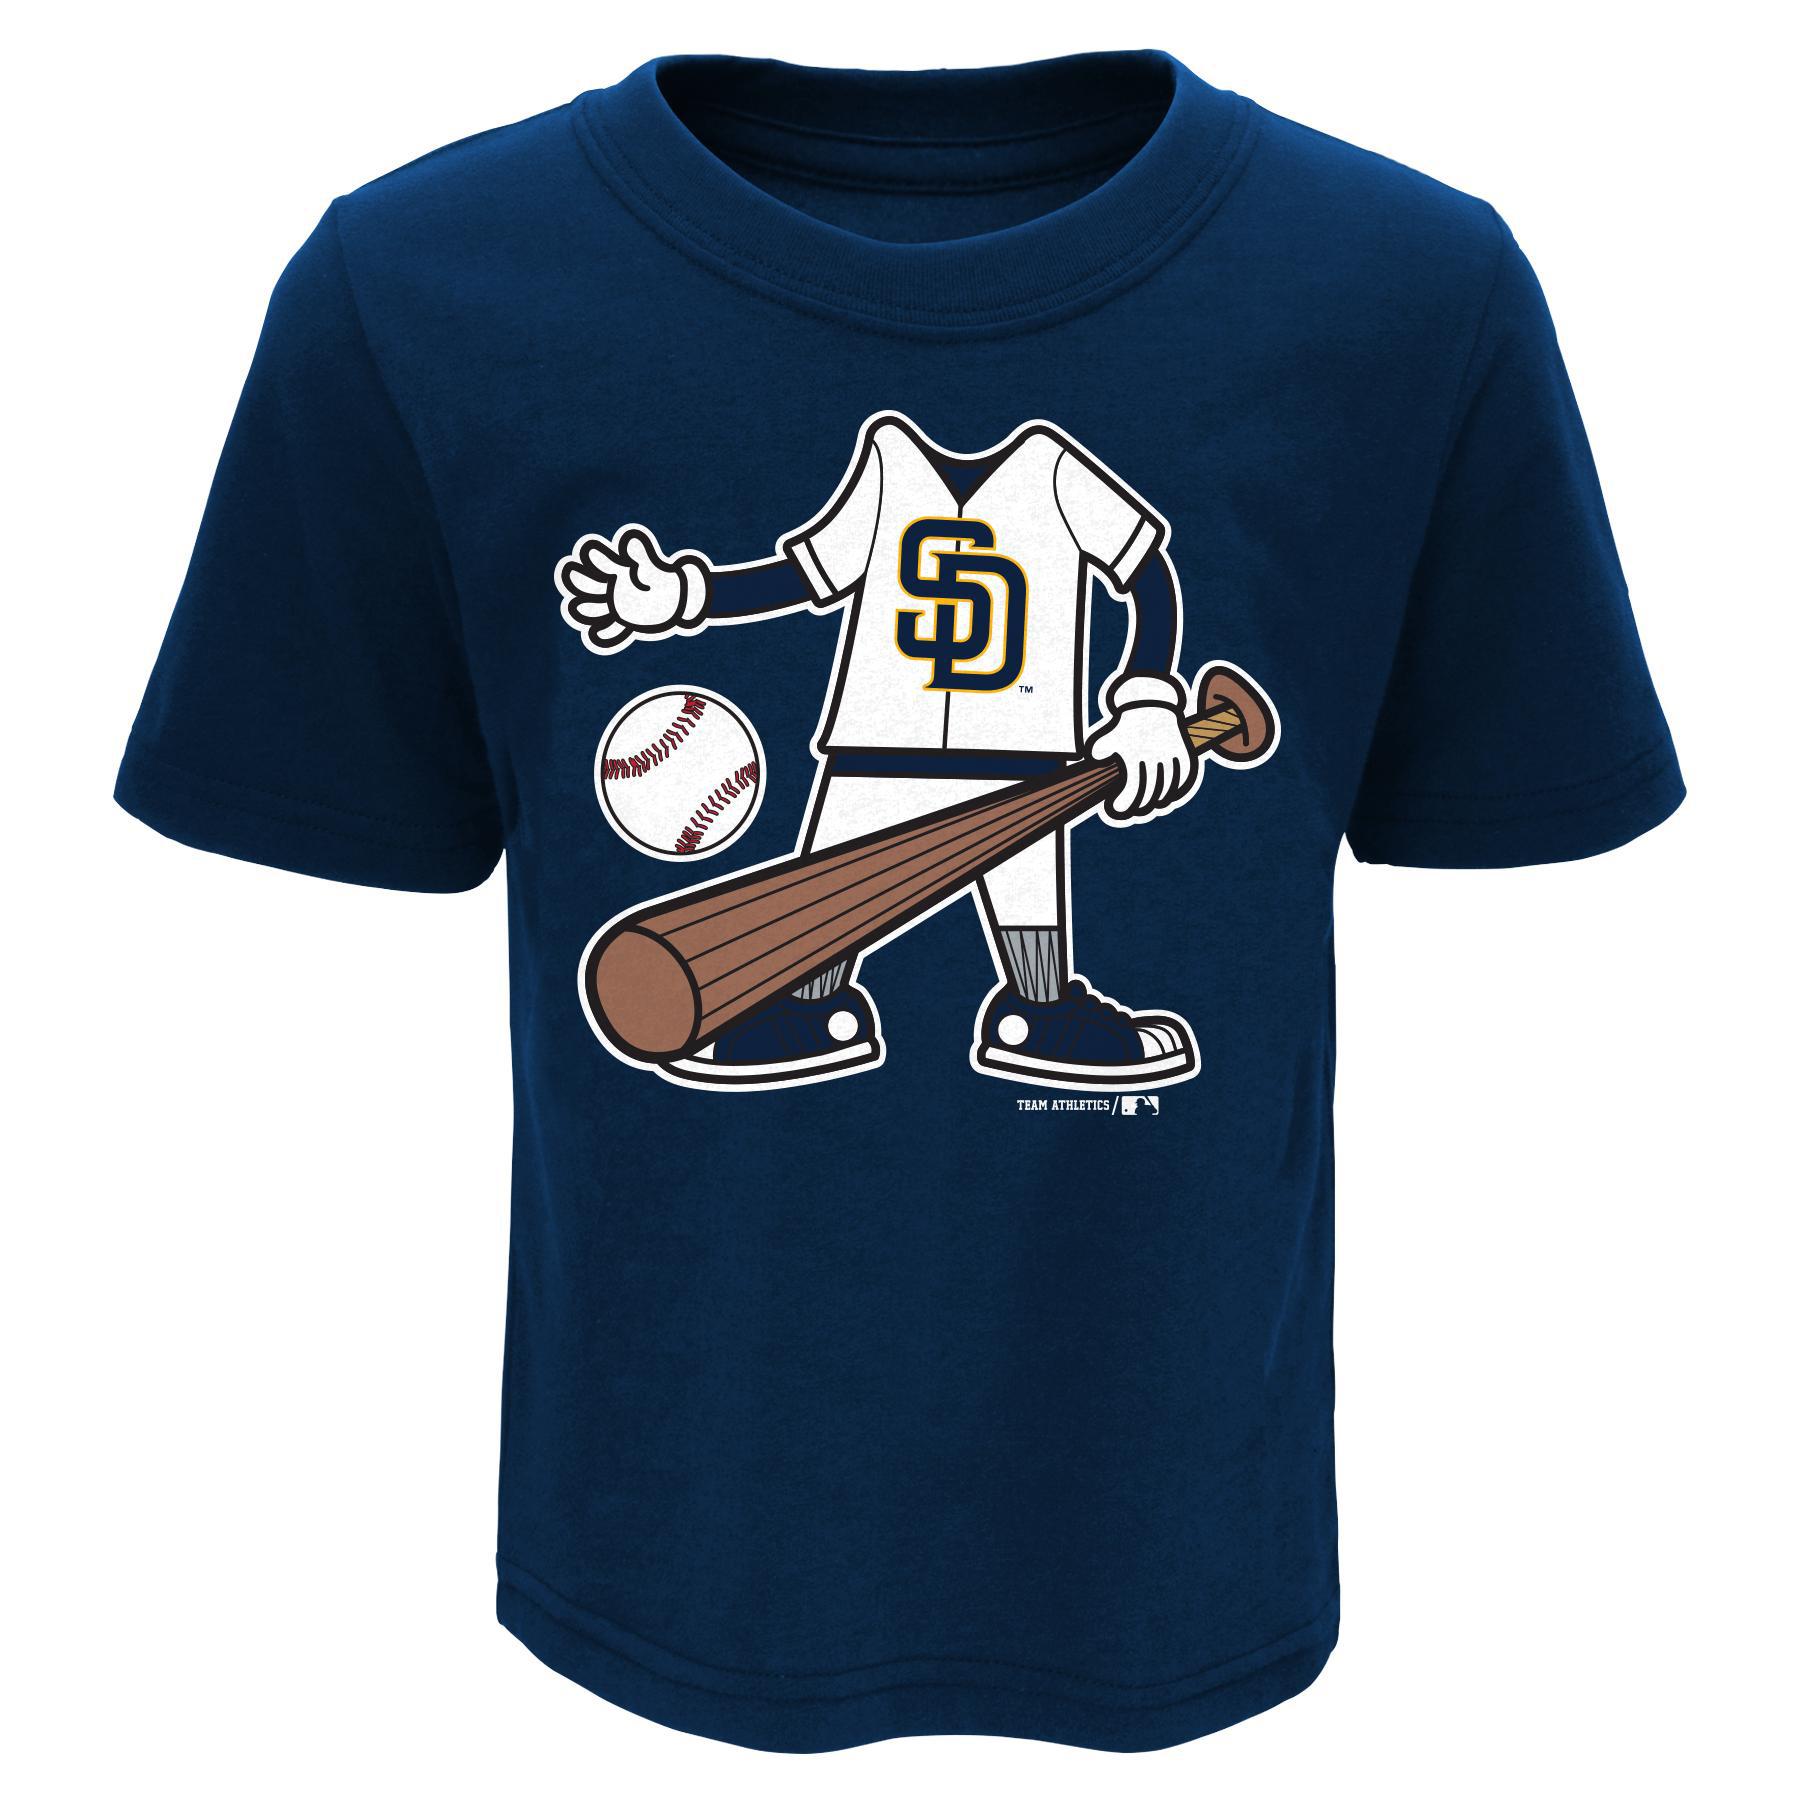 MLB Infant & Toddler Boy's T-Shirt - San Diego Padres